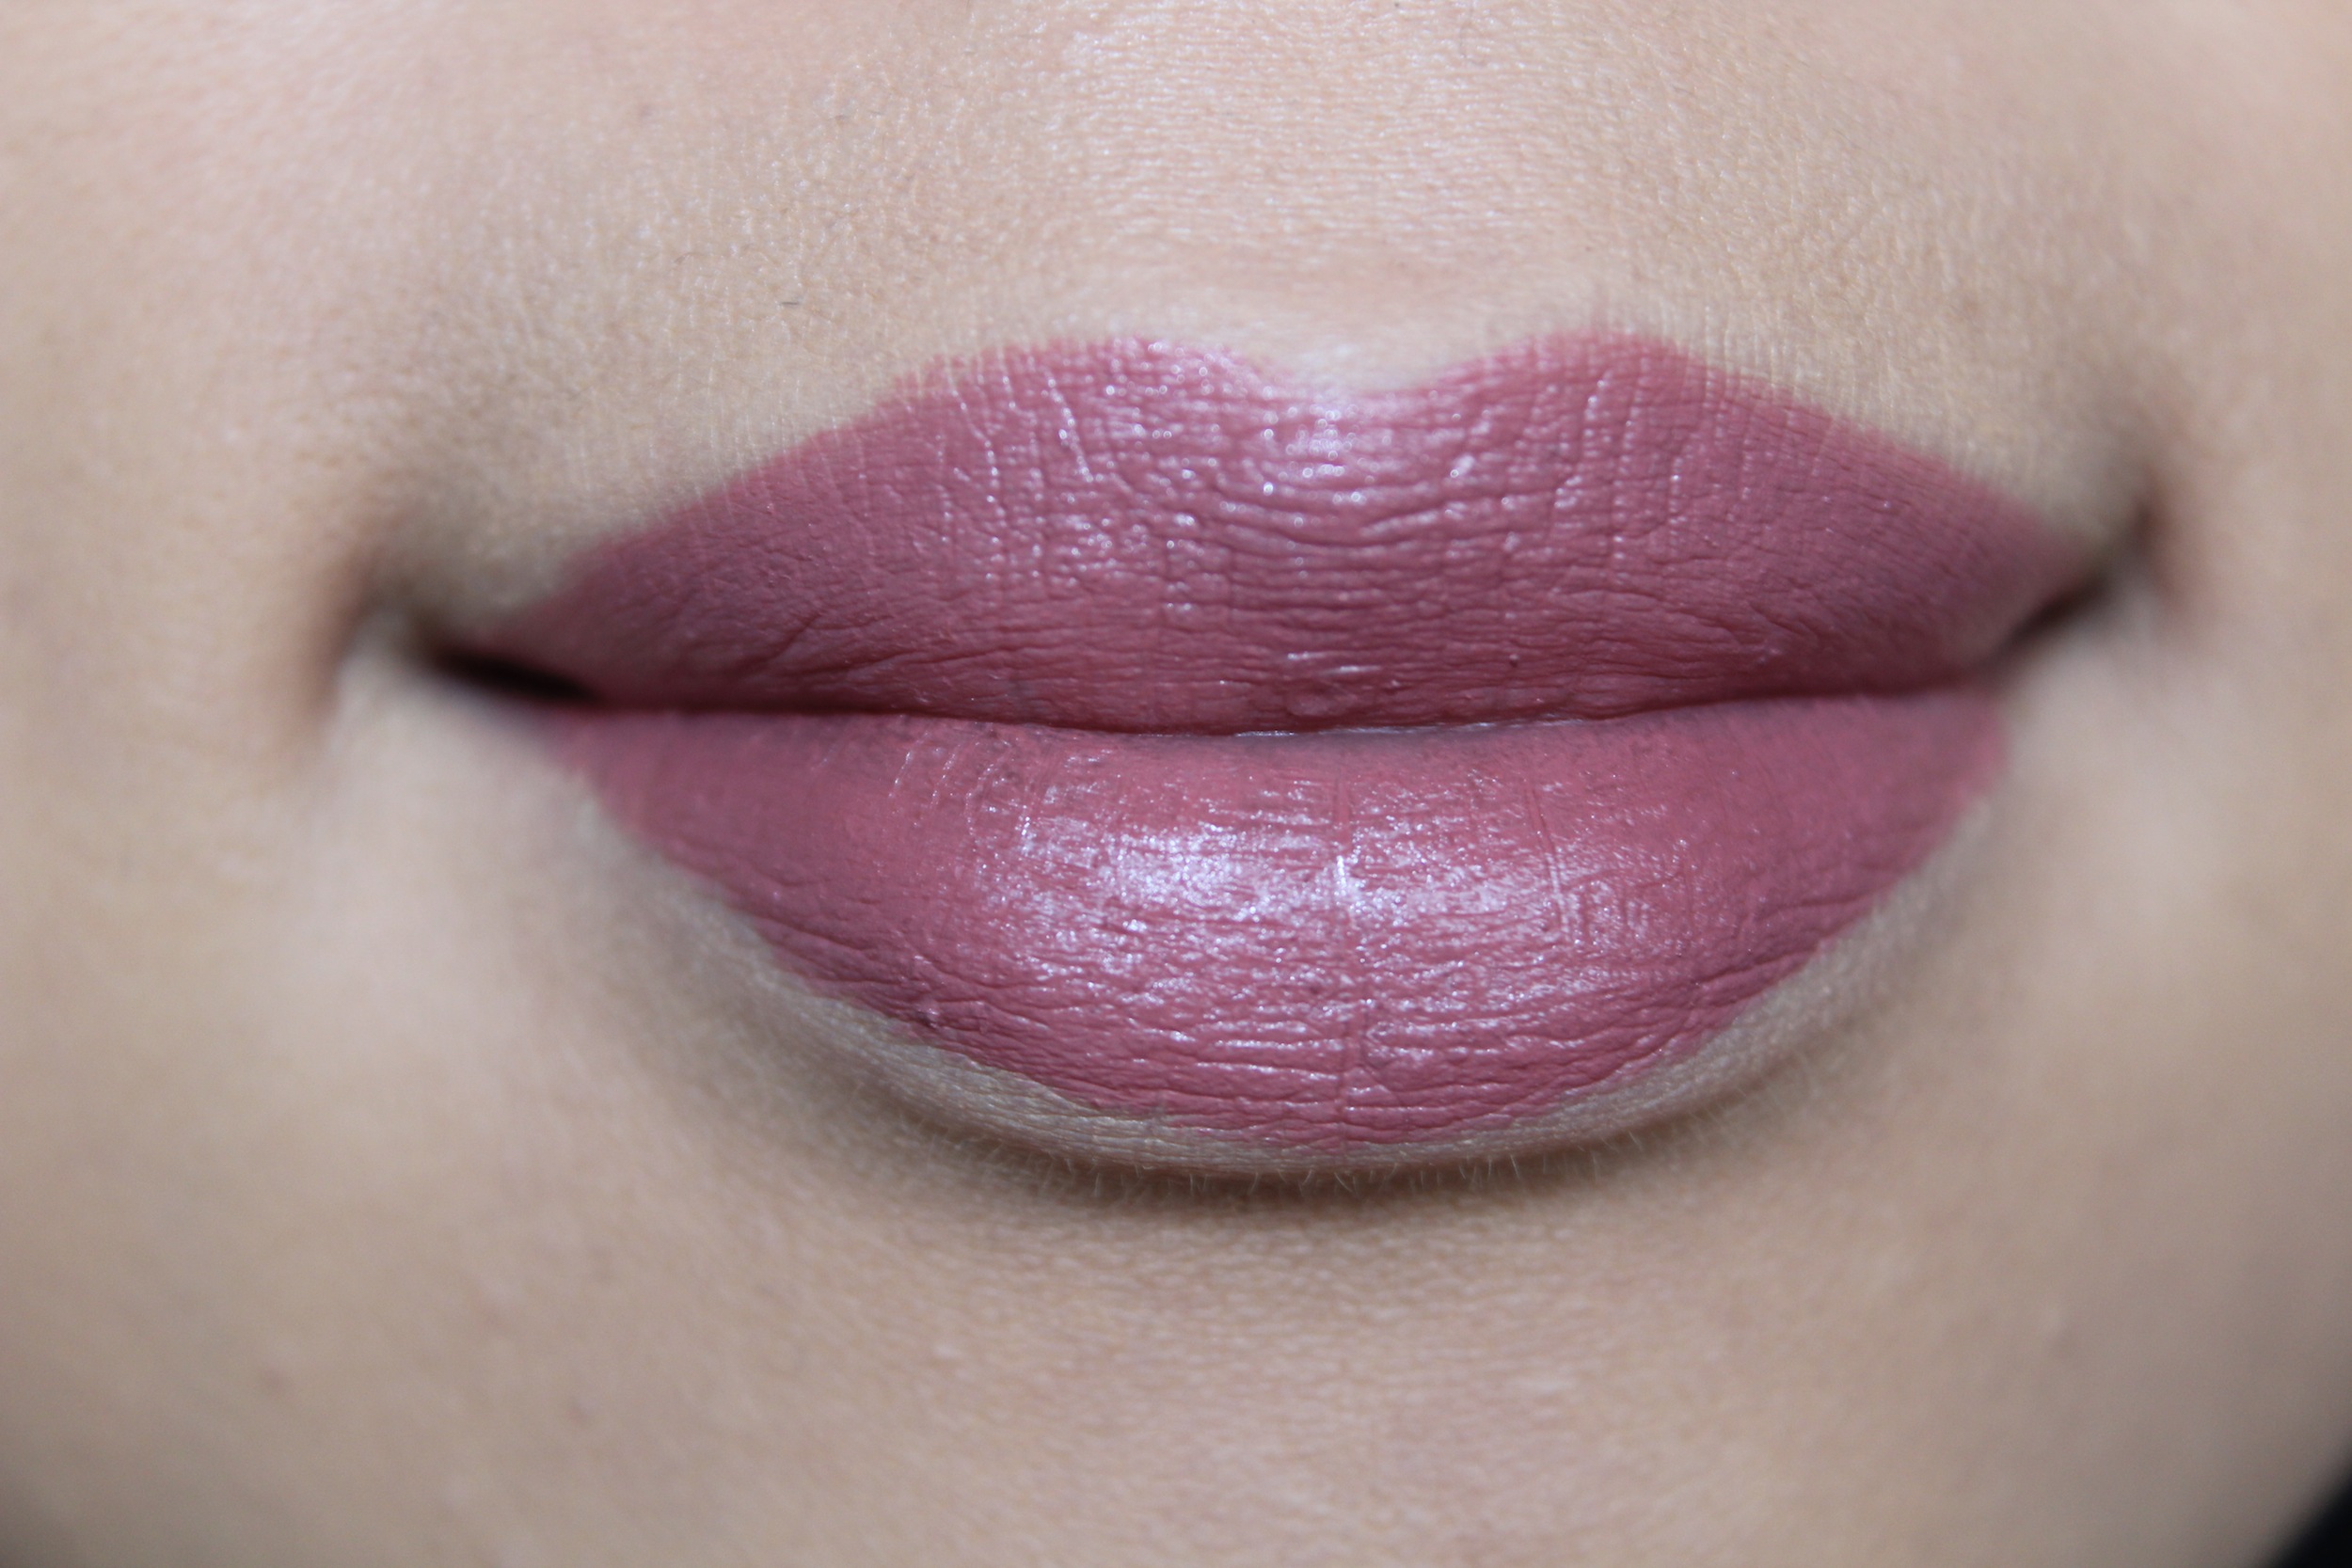 mac lipstick swatches on lips